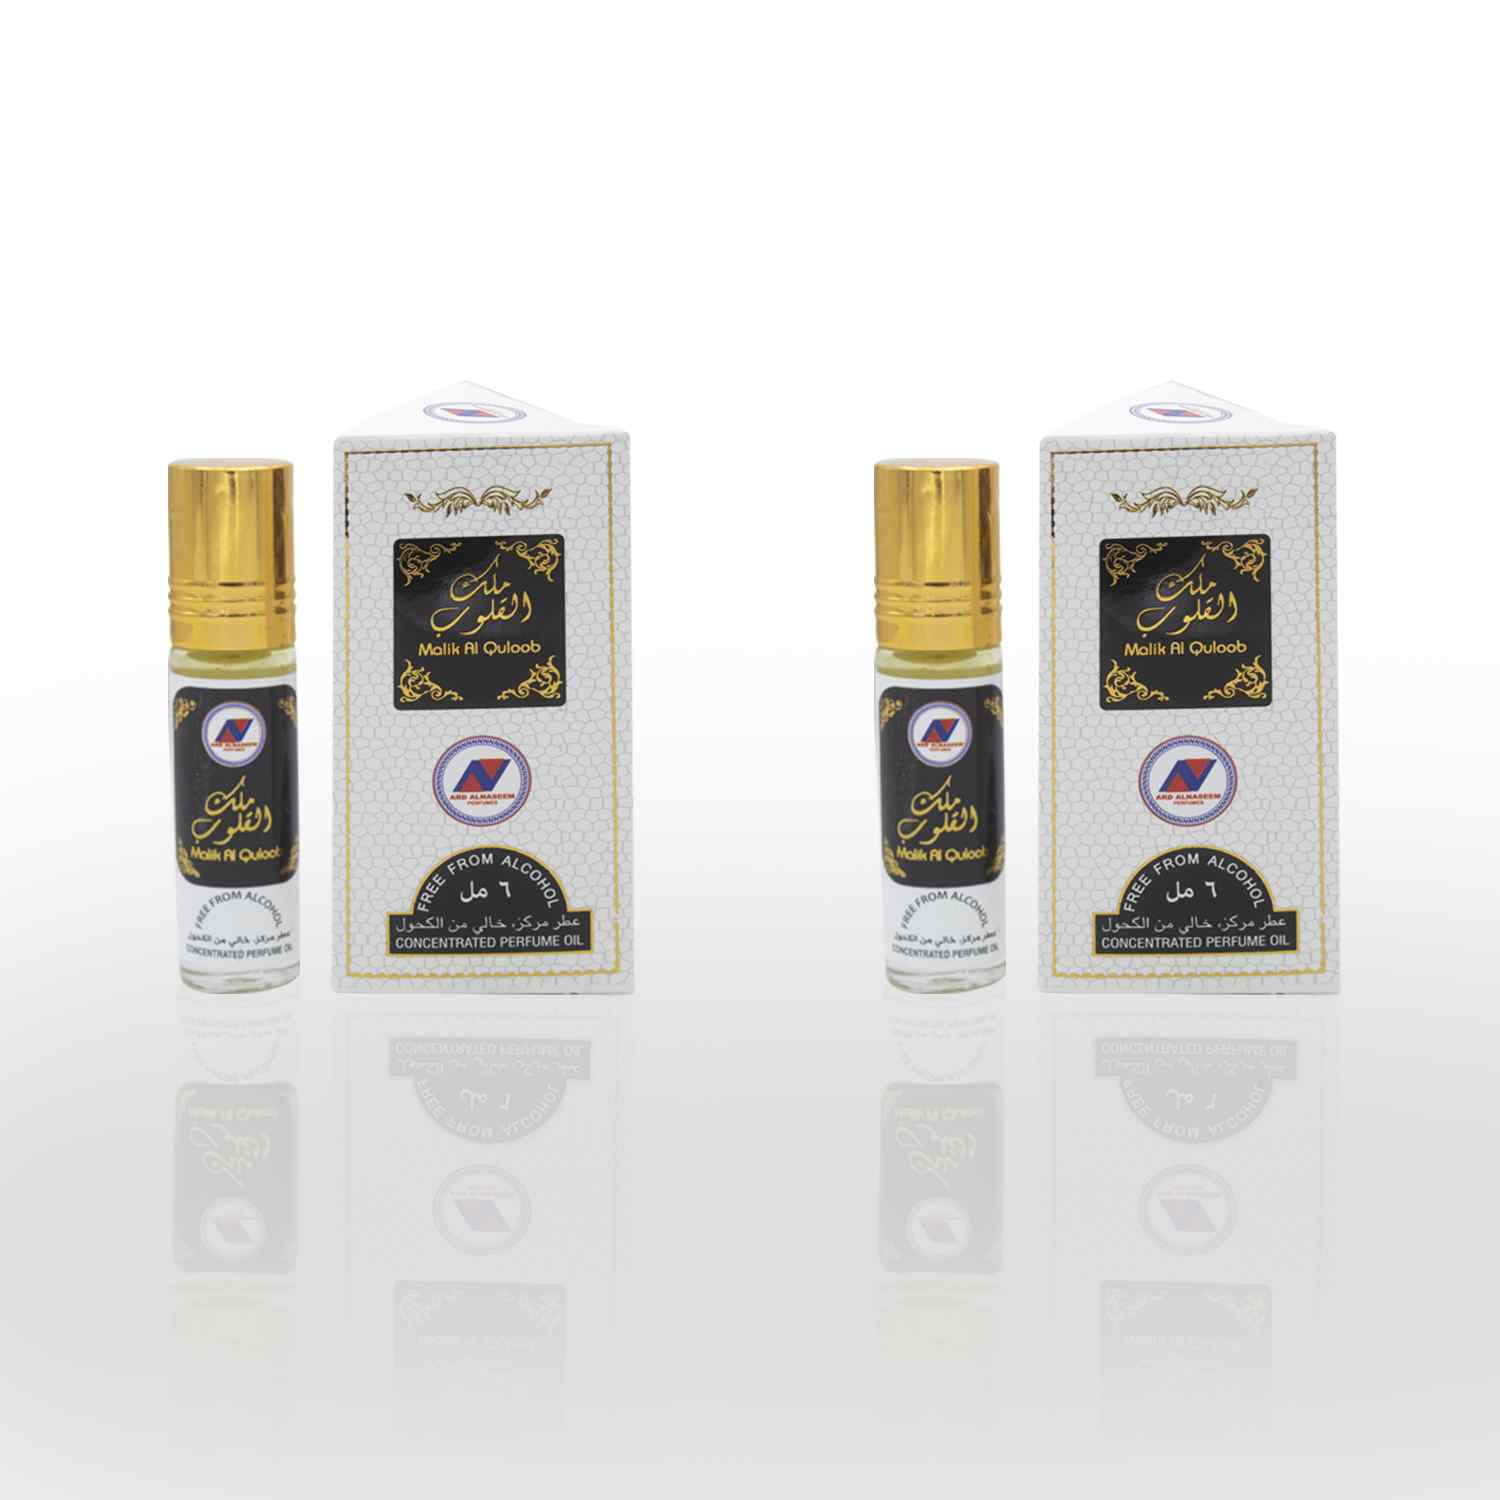 Malik Al Quloob concentrated oil attar rollon 6ml by Ard perfumes